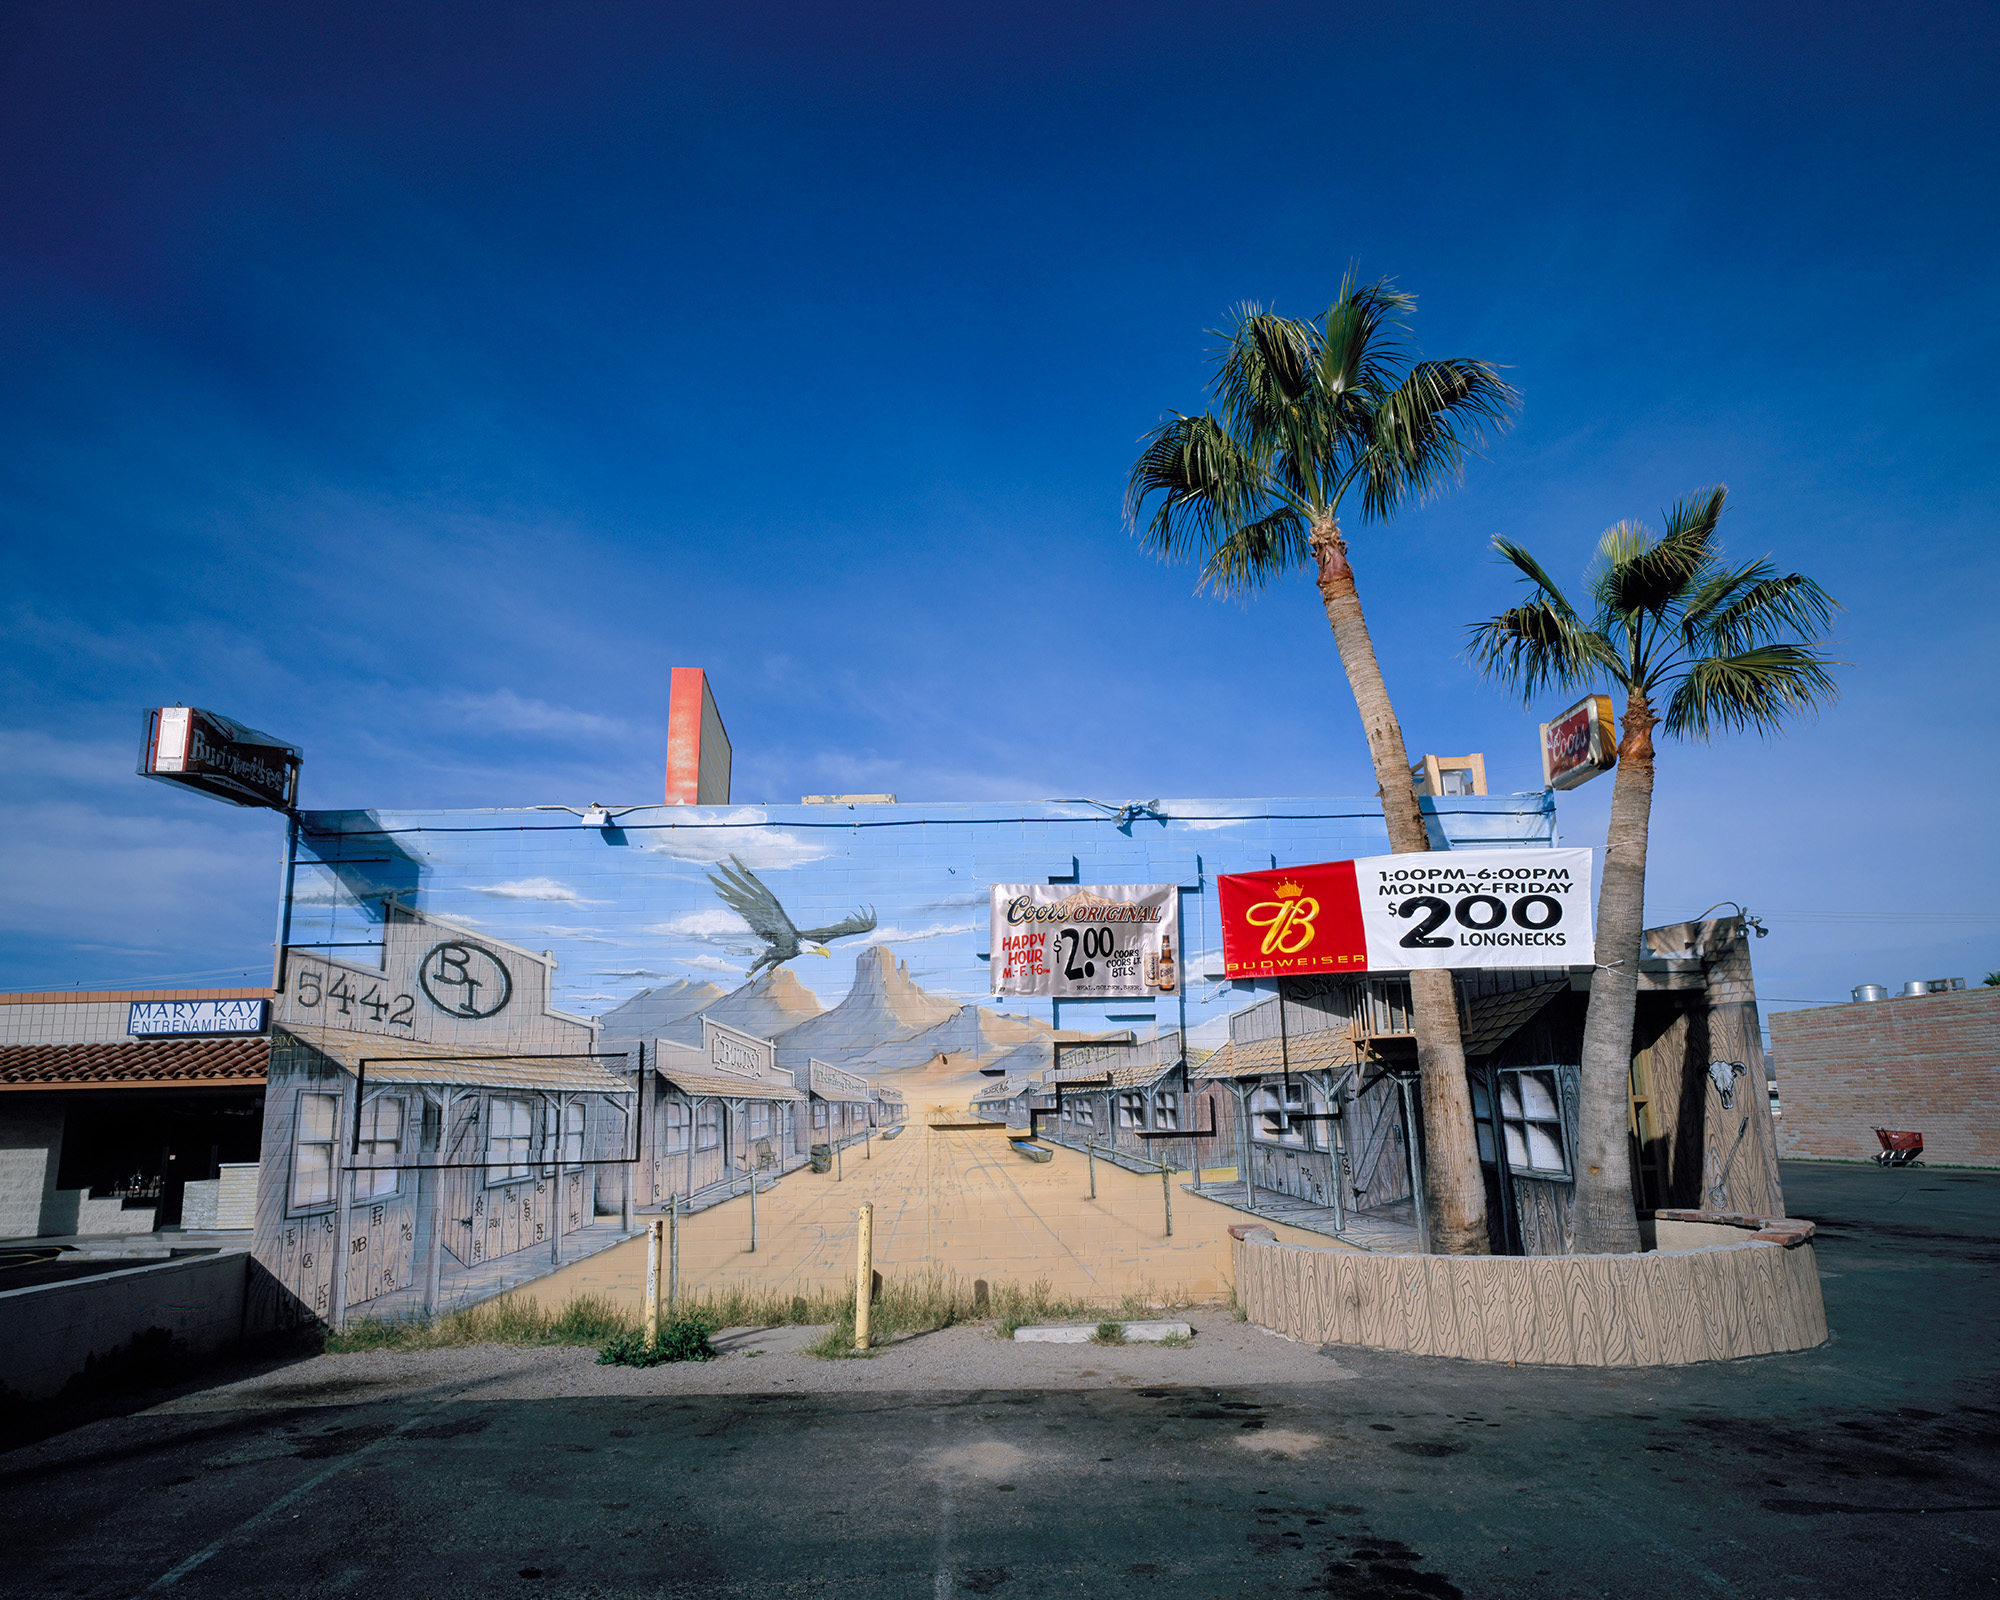 "Desert Mirage: Tucson Liquor Store" is a striking shot captured on Velvia 50 film using a Mamiya 7 camera. Found during a work...